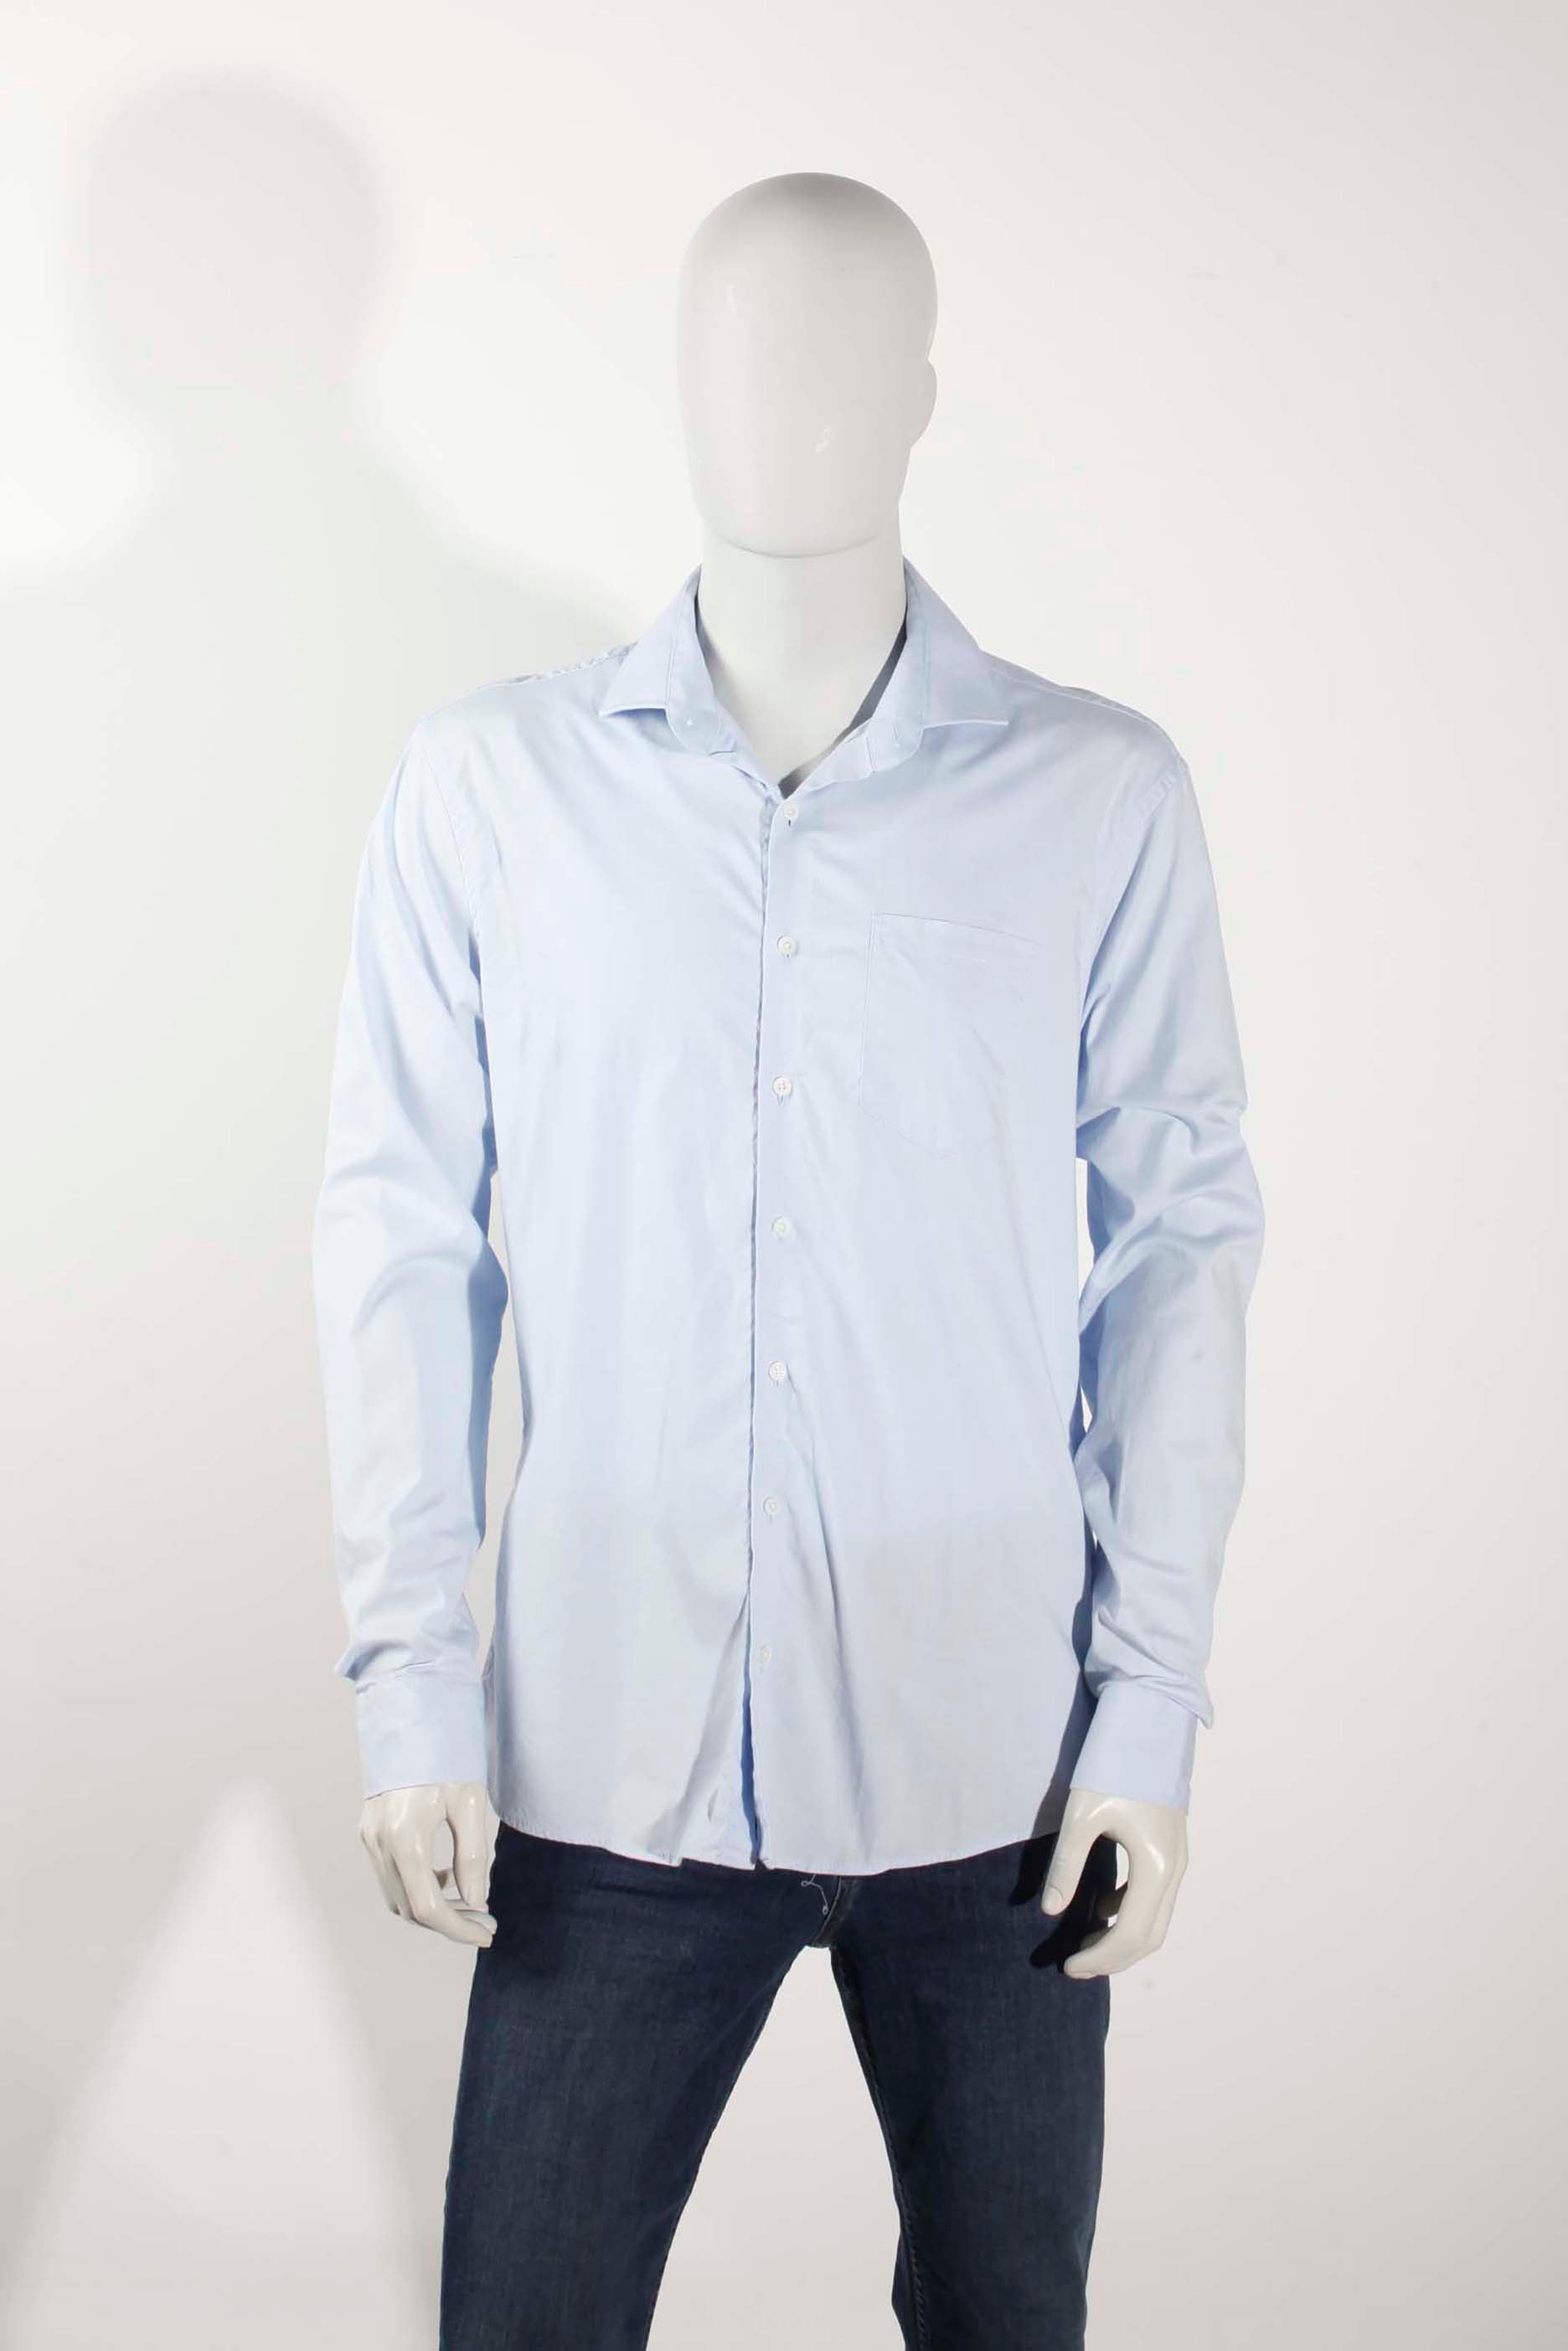 Mens Blue Work Shirt (Large)